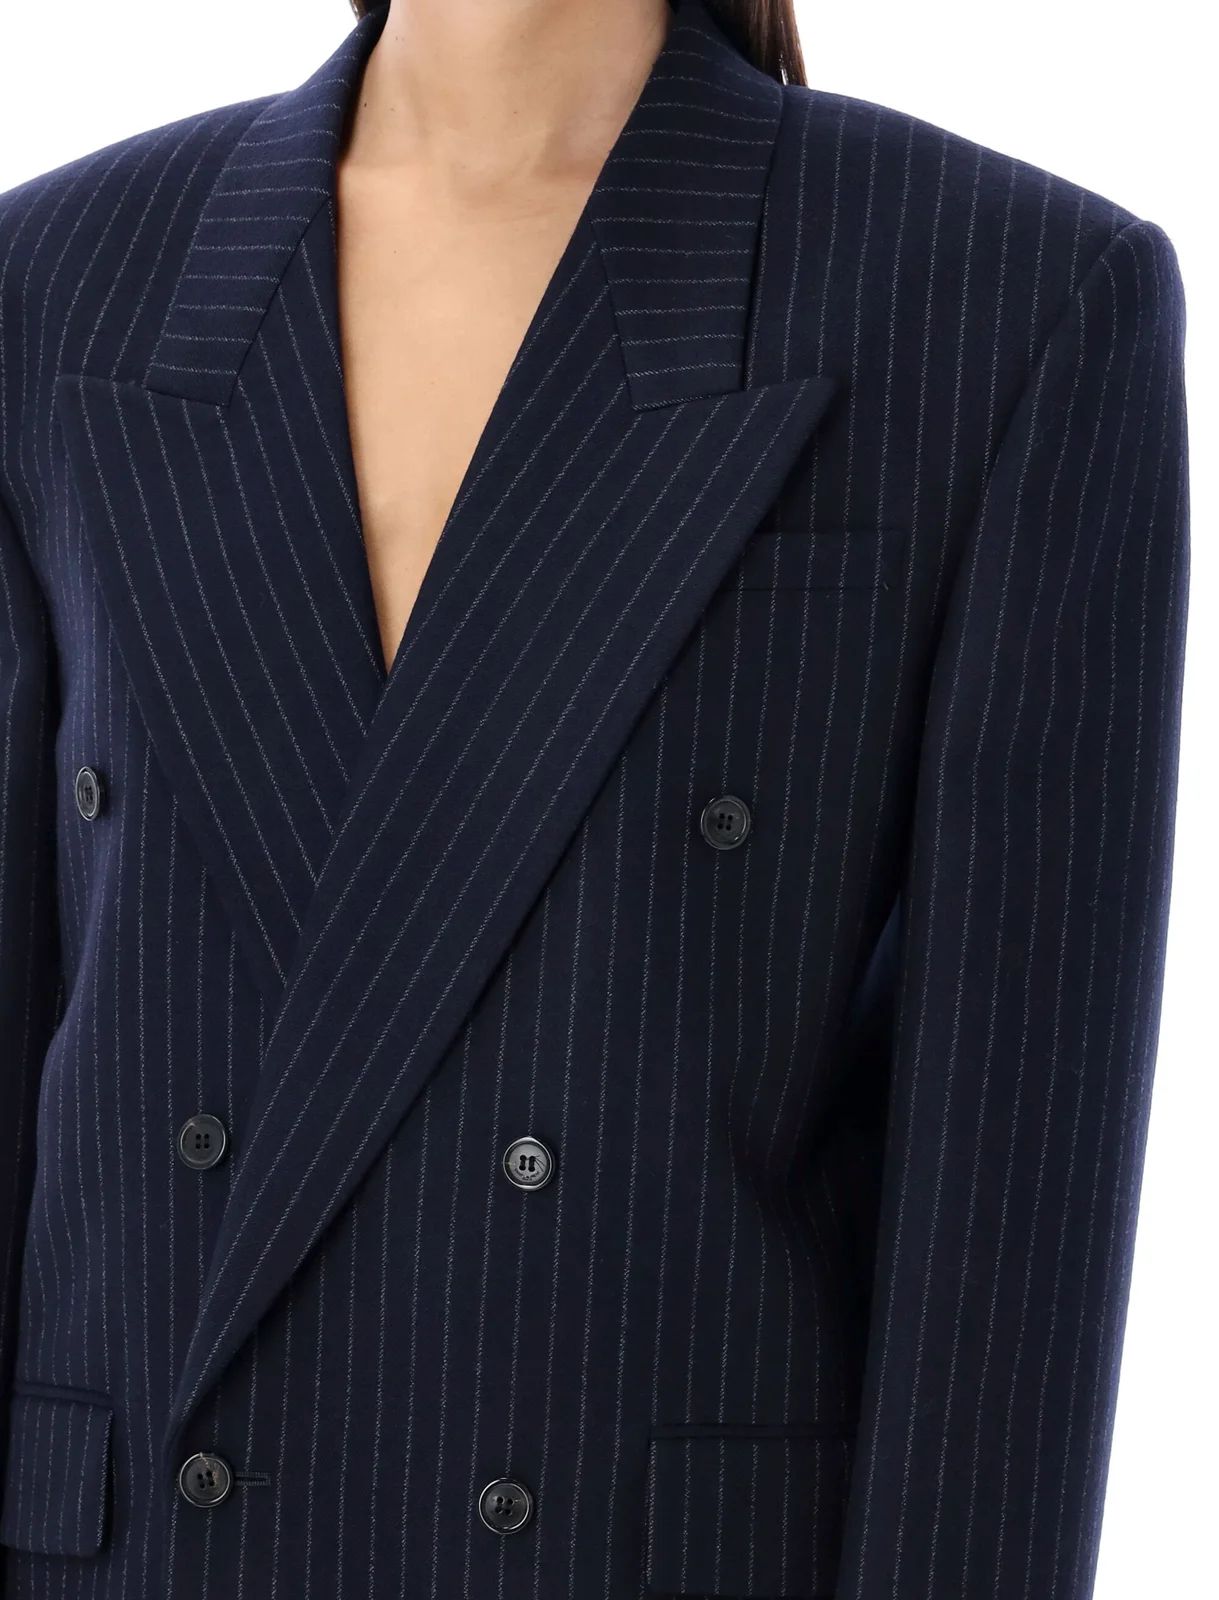 Saint Laurent Single-Breasted Striped Blazer | Cettire Global